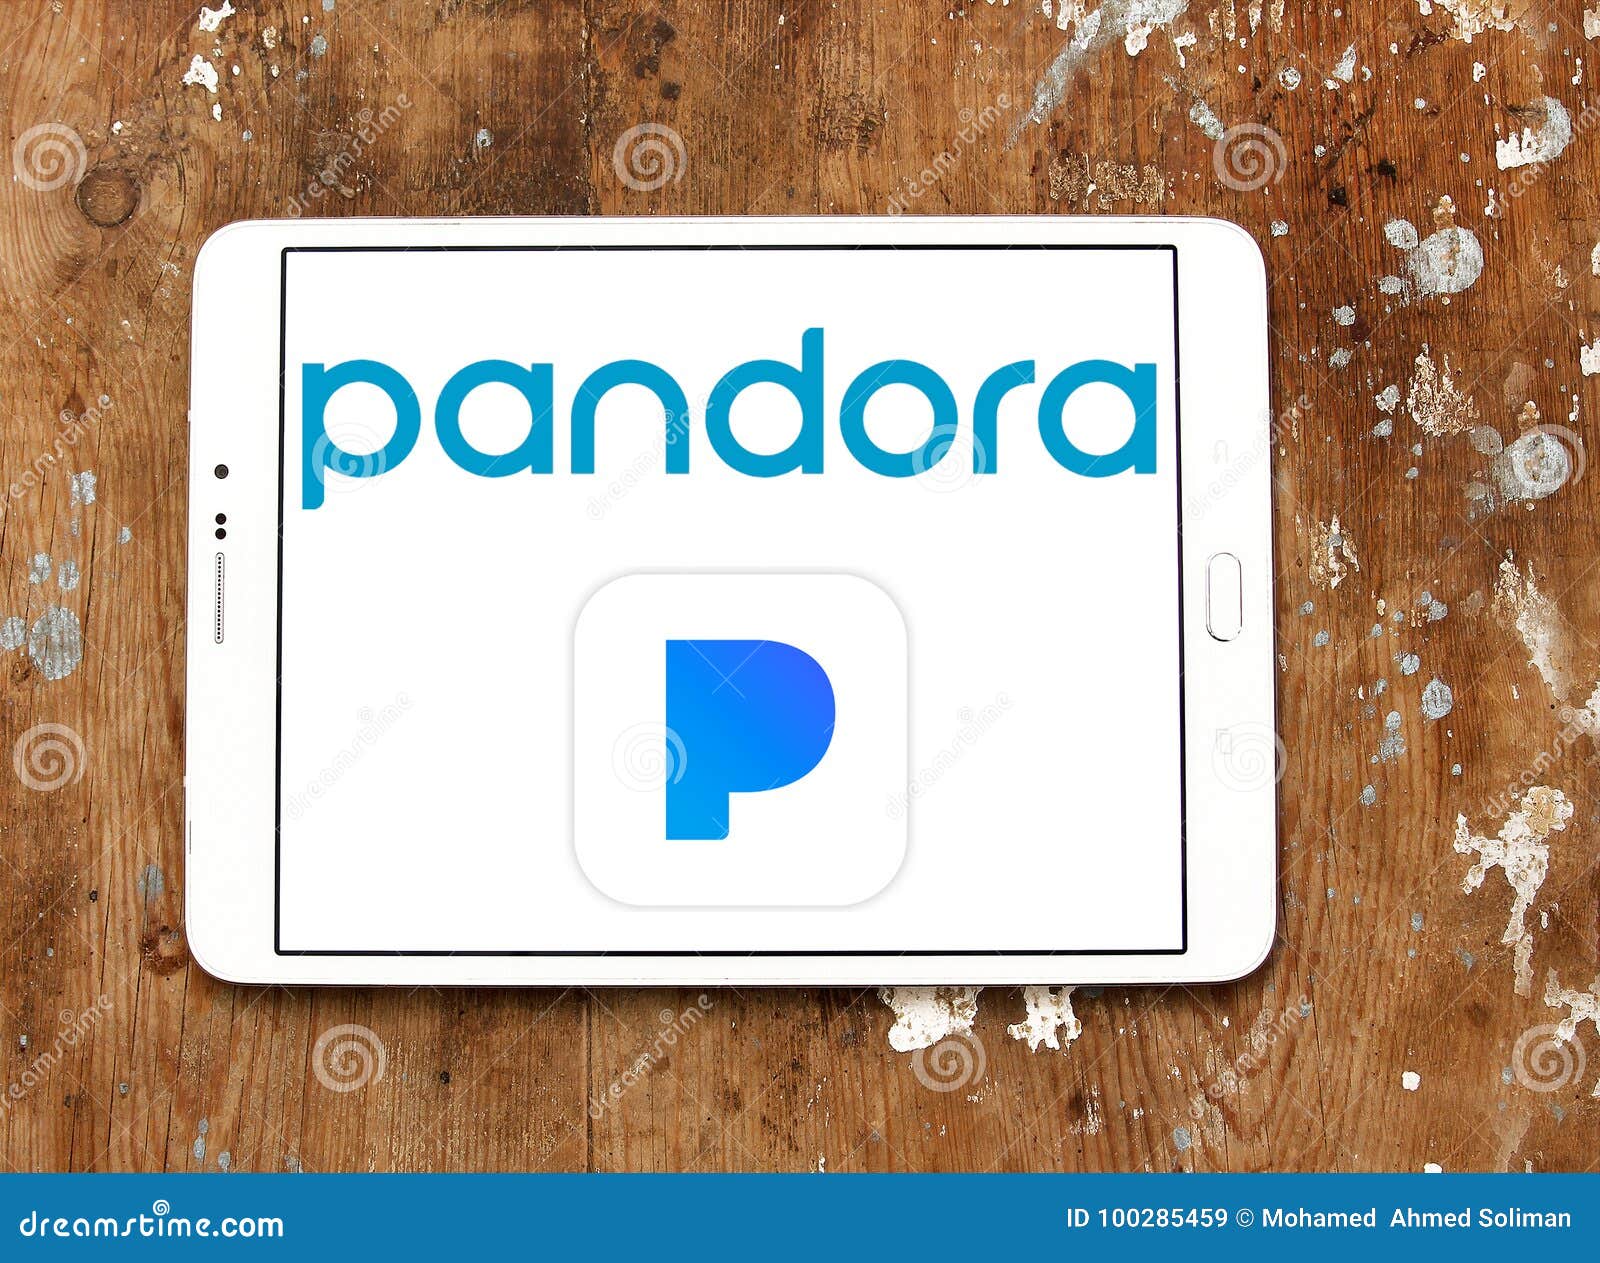 Pandora Internet Radio Logo Editorial Stock Image - Image of logotype,  internet: 100285459